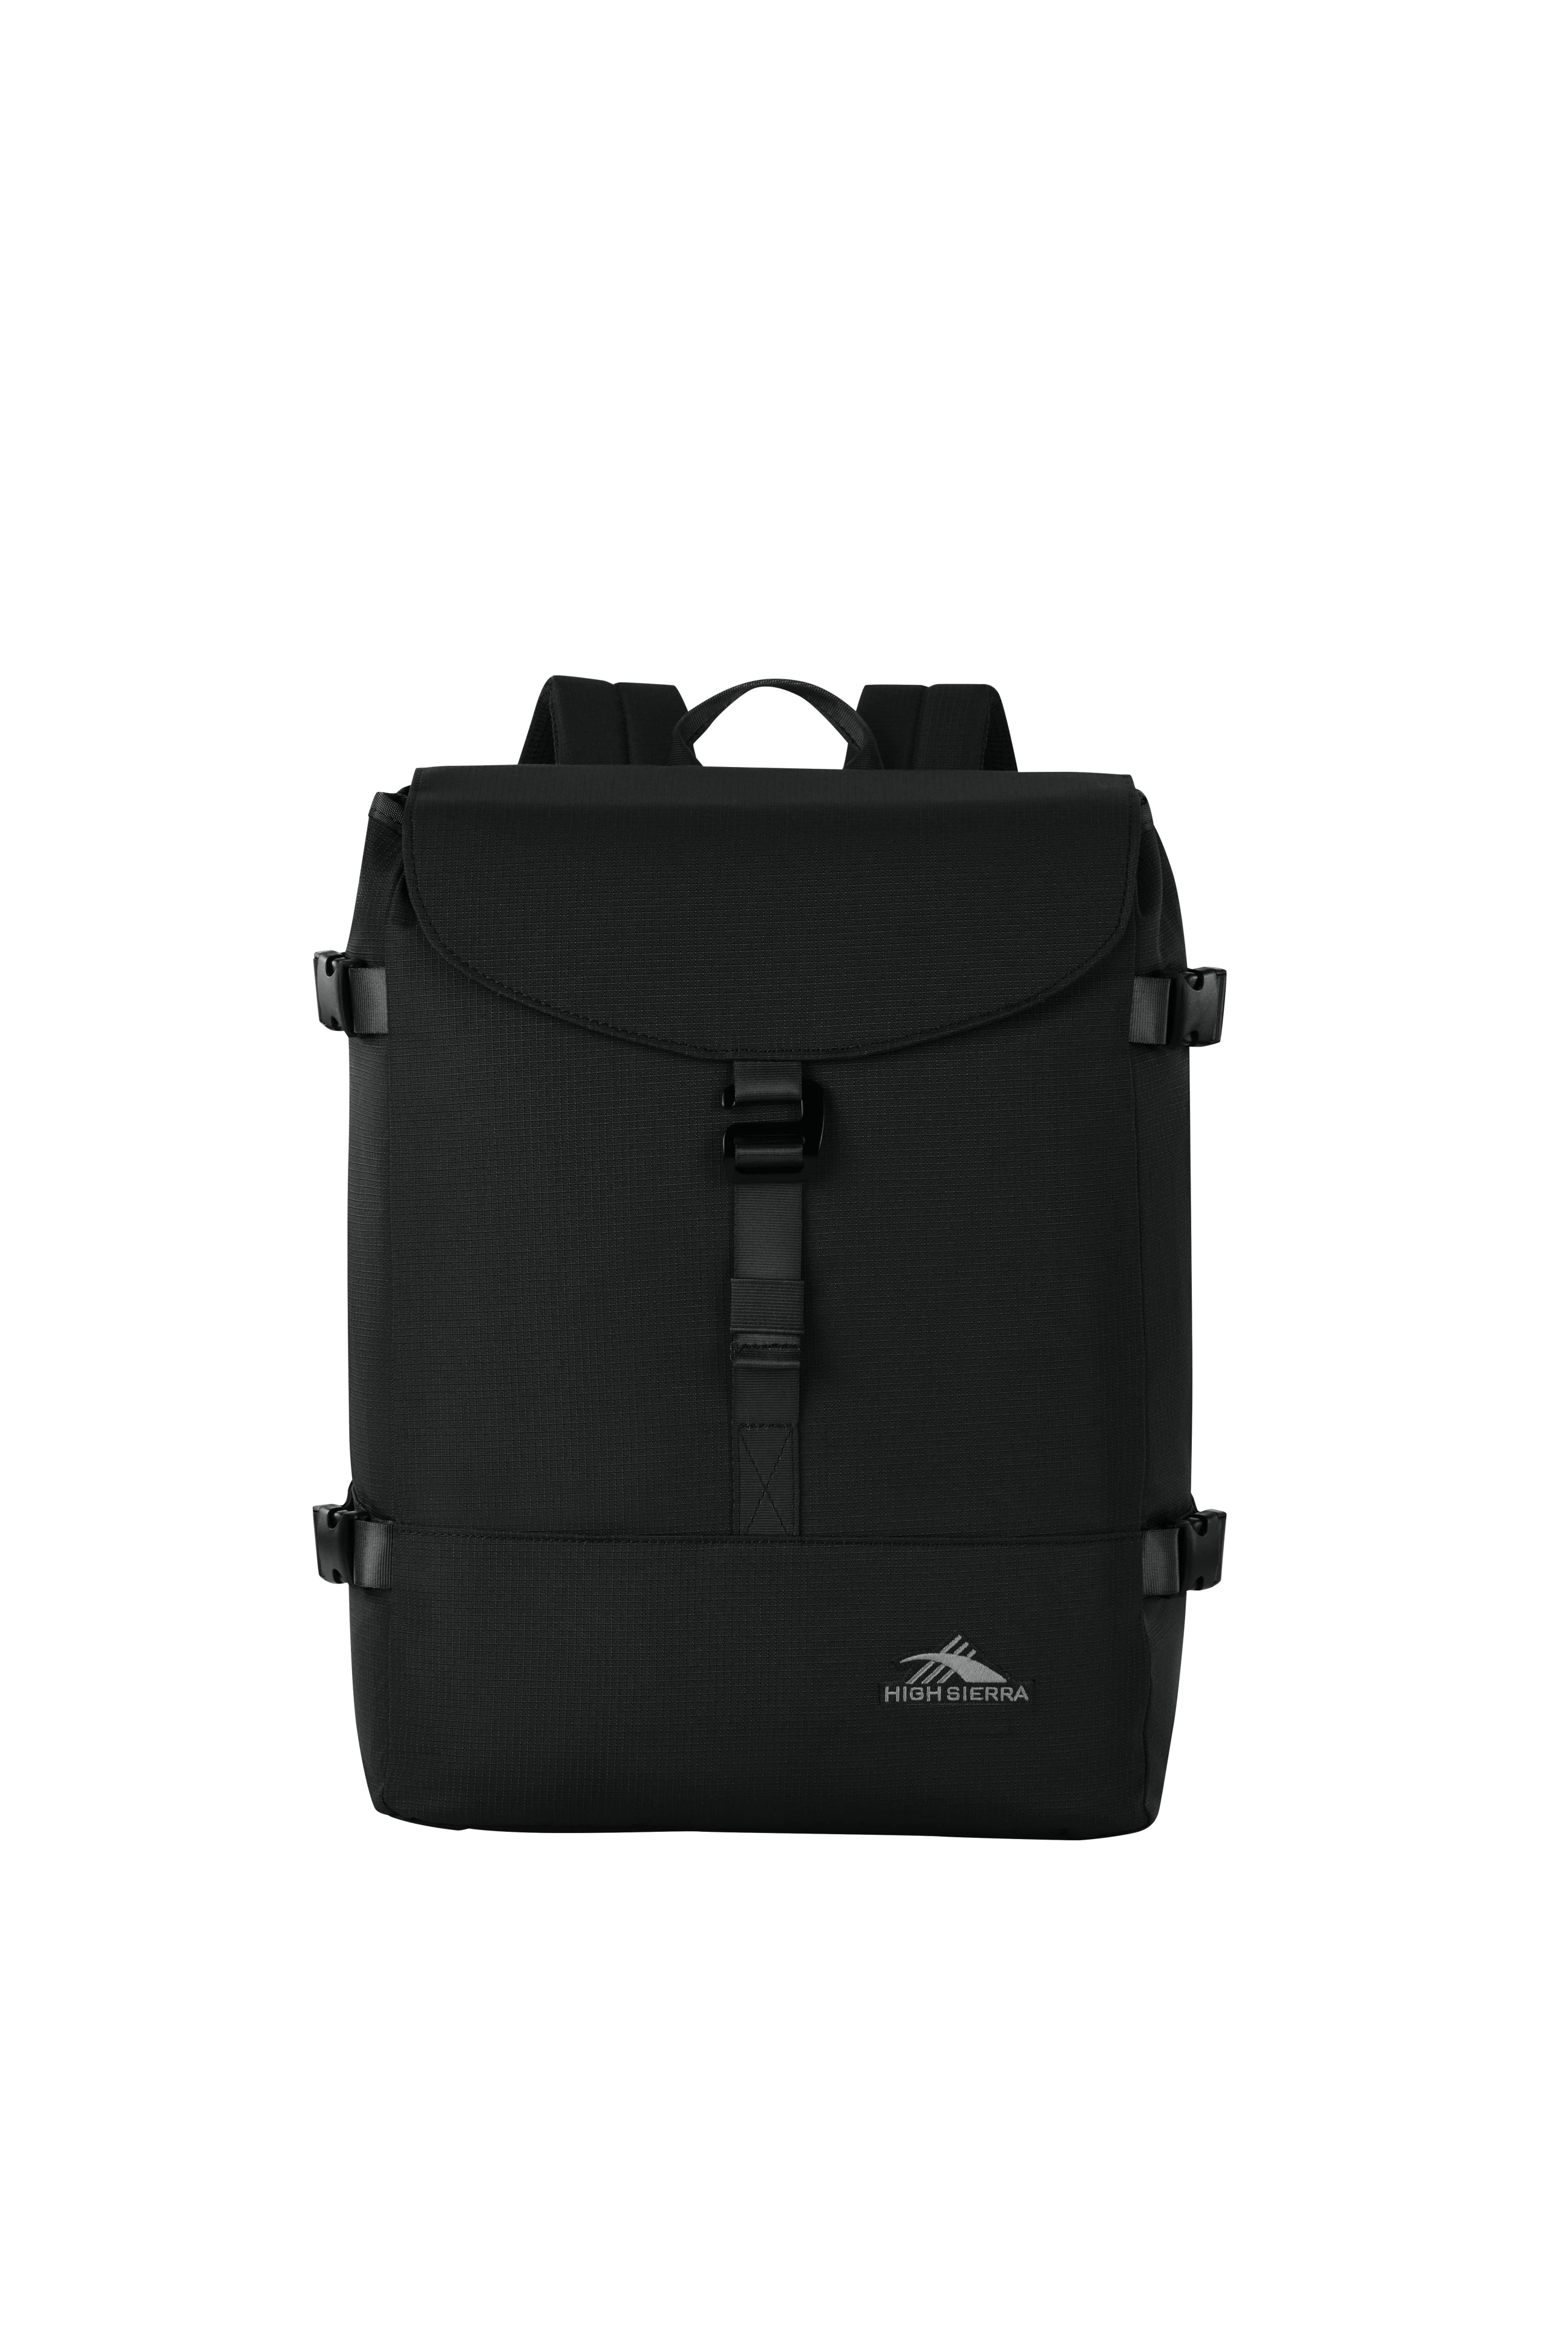 High Sierra - Camille 20L 15.6in Laptop backpack - Black-1